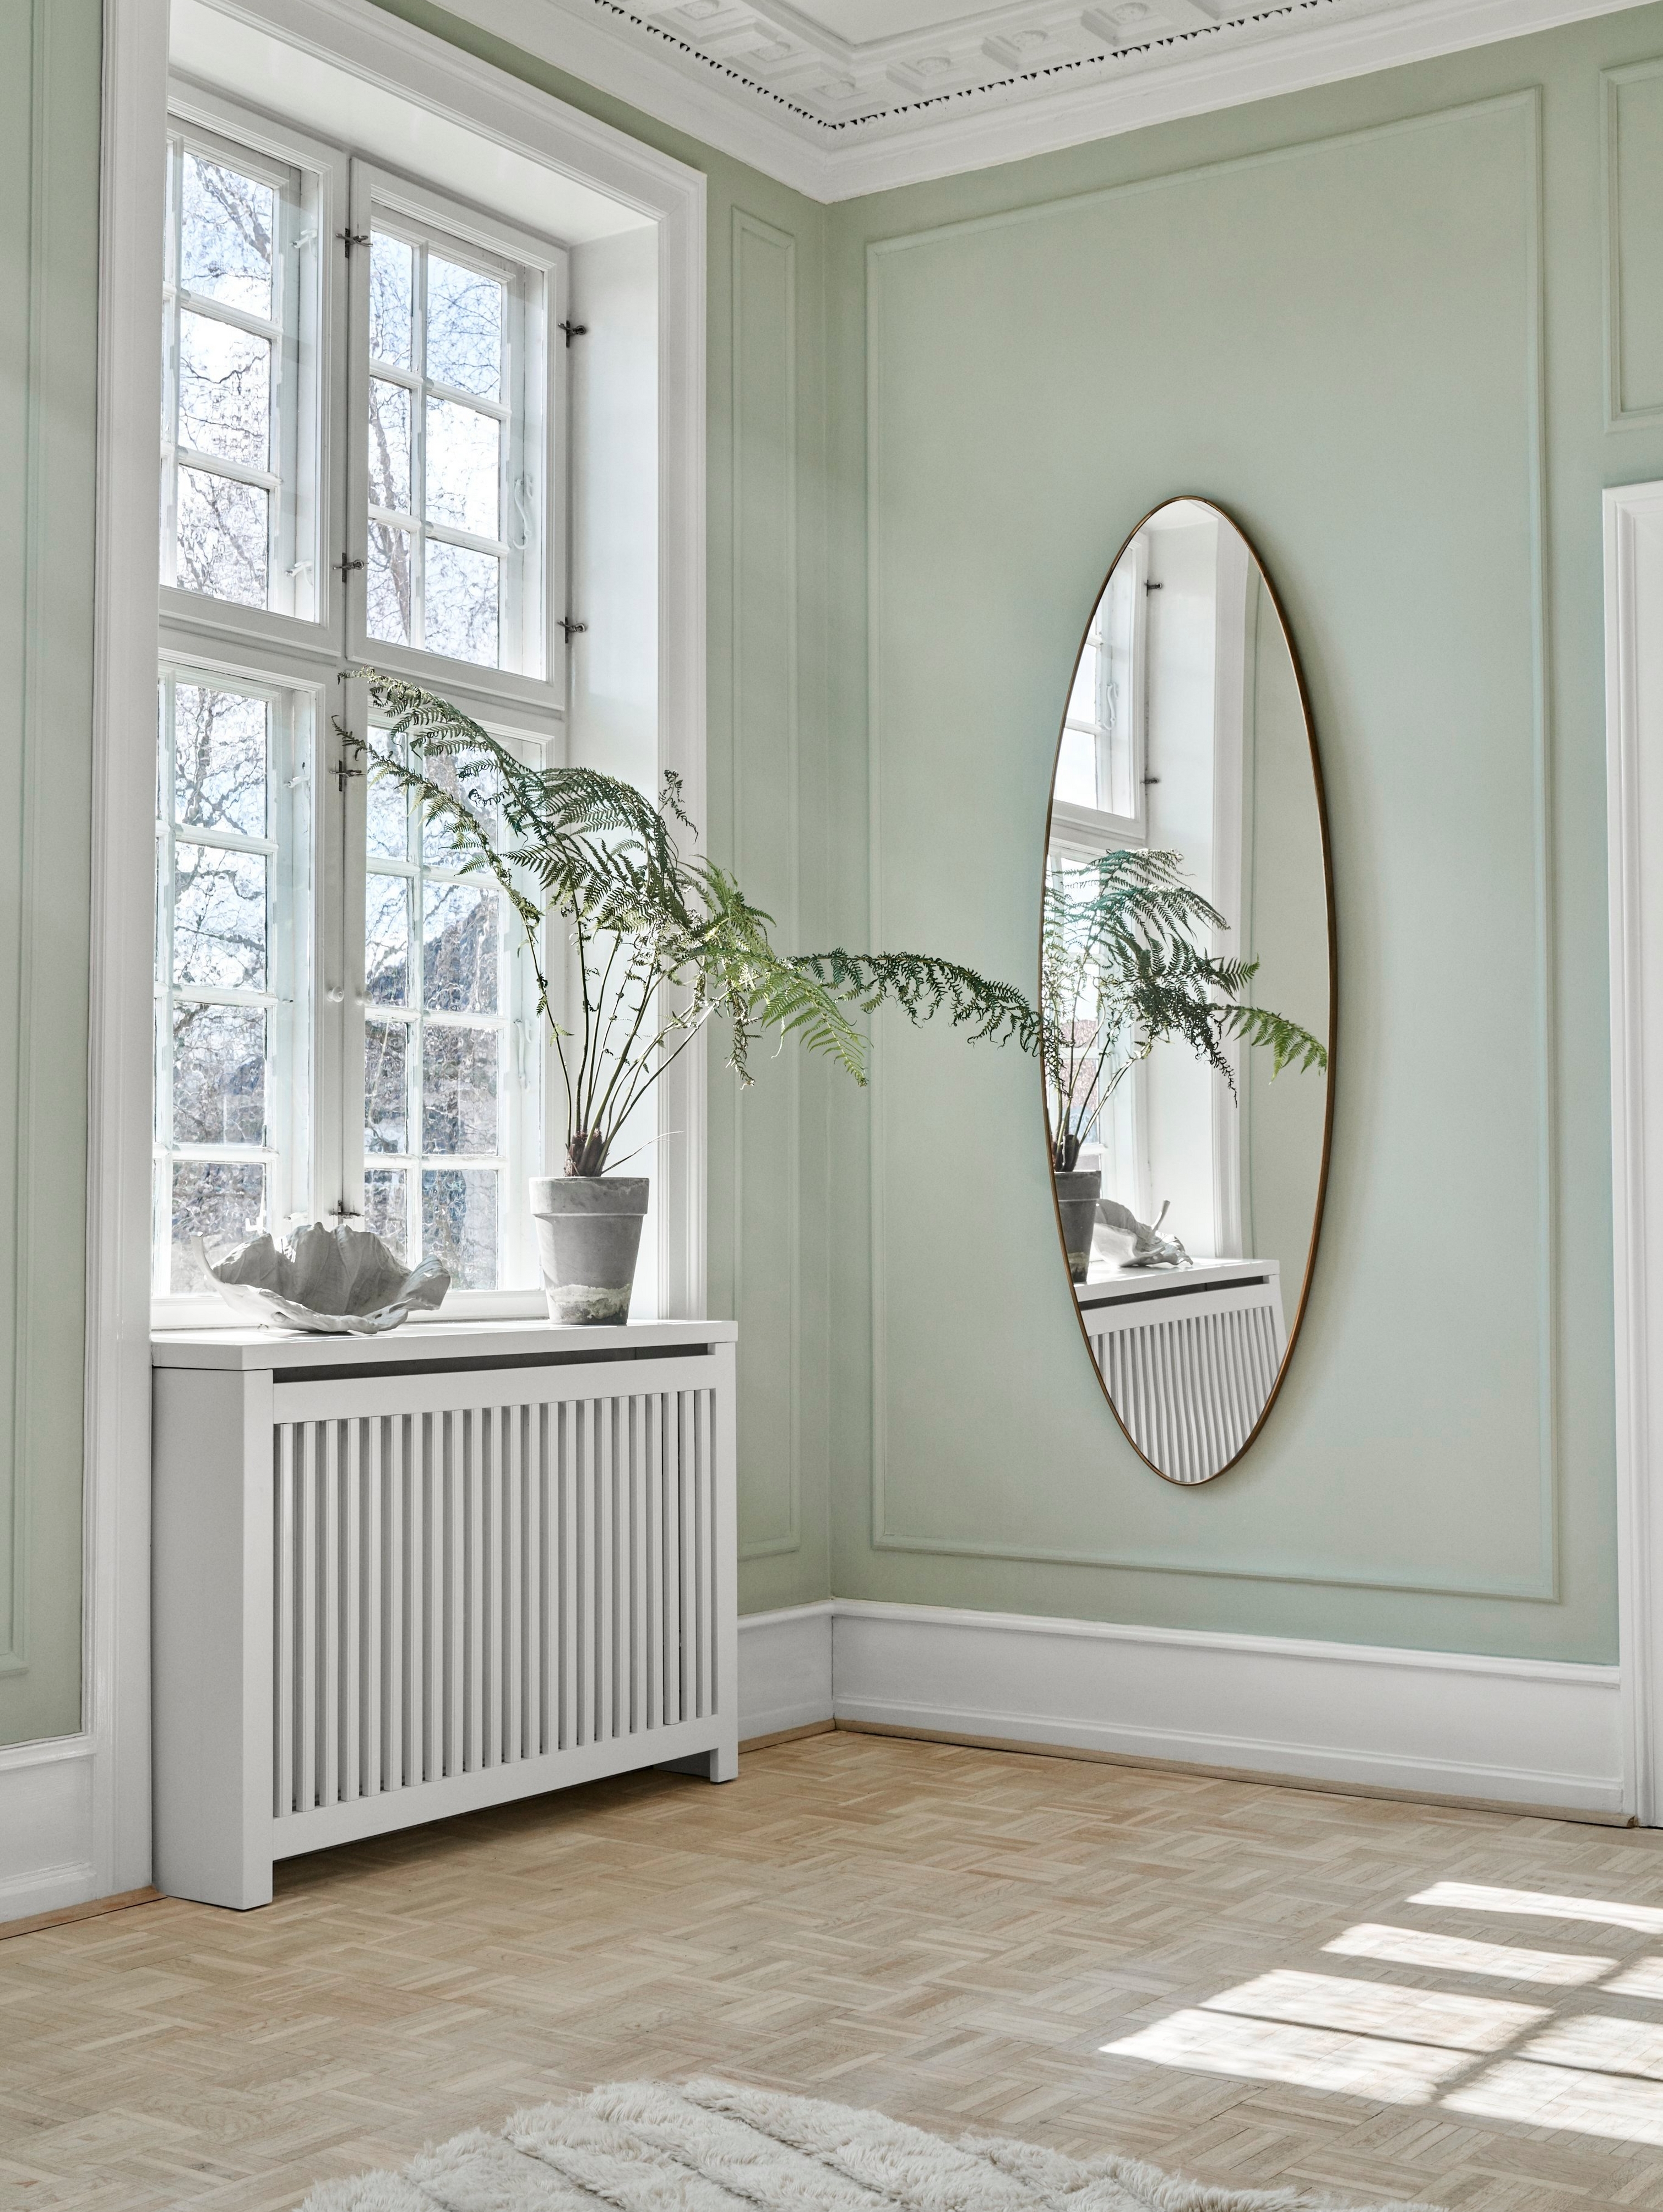 Bright corner featuring a mirror, plant and the Magnolia sculpture